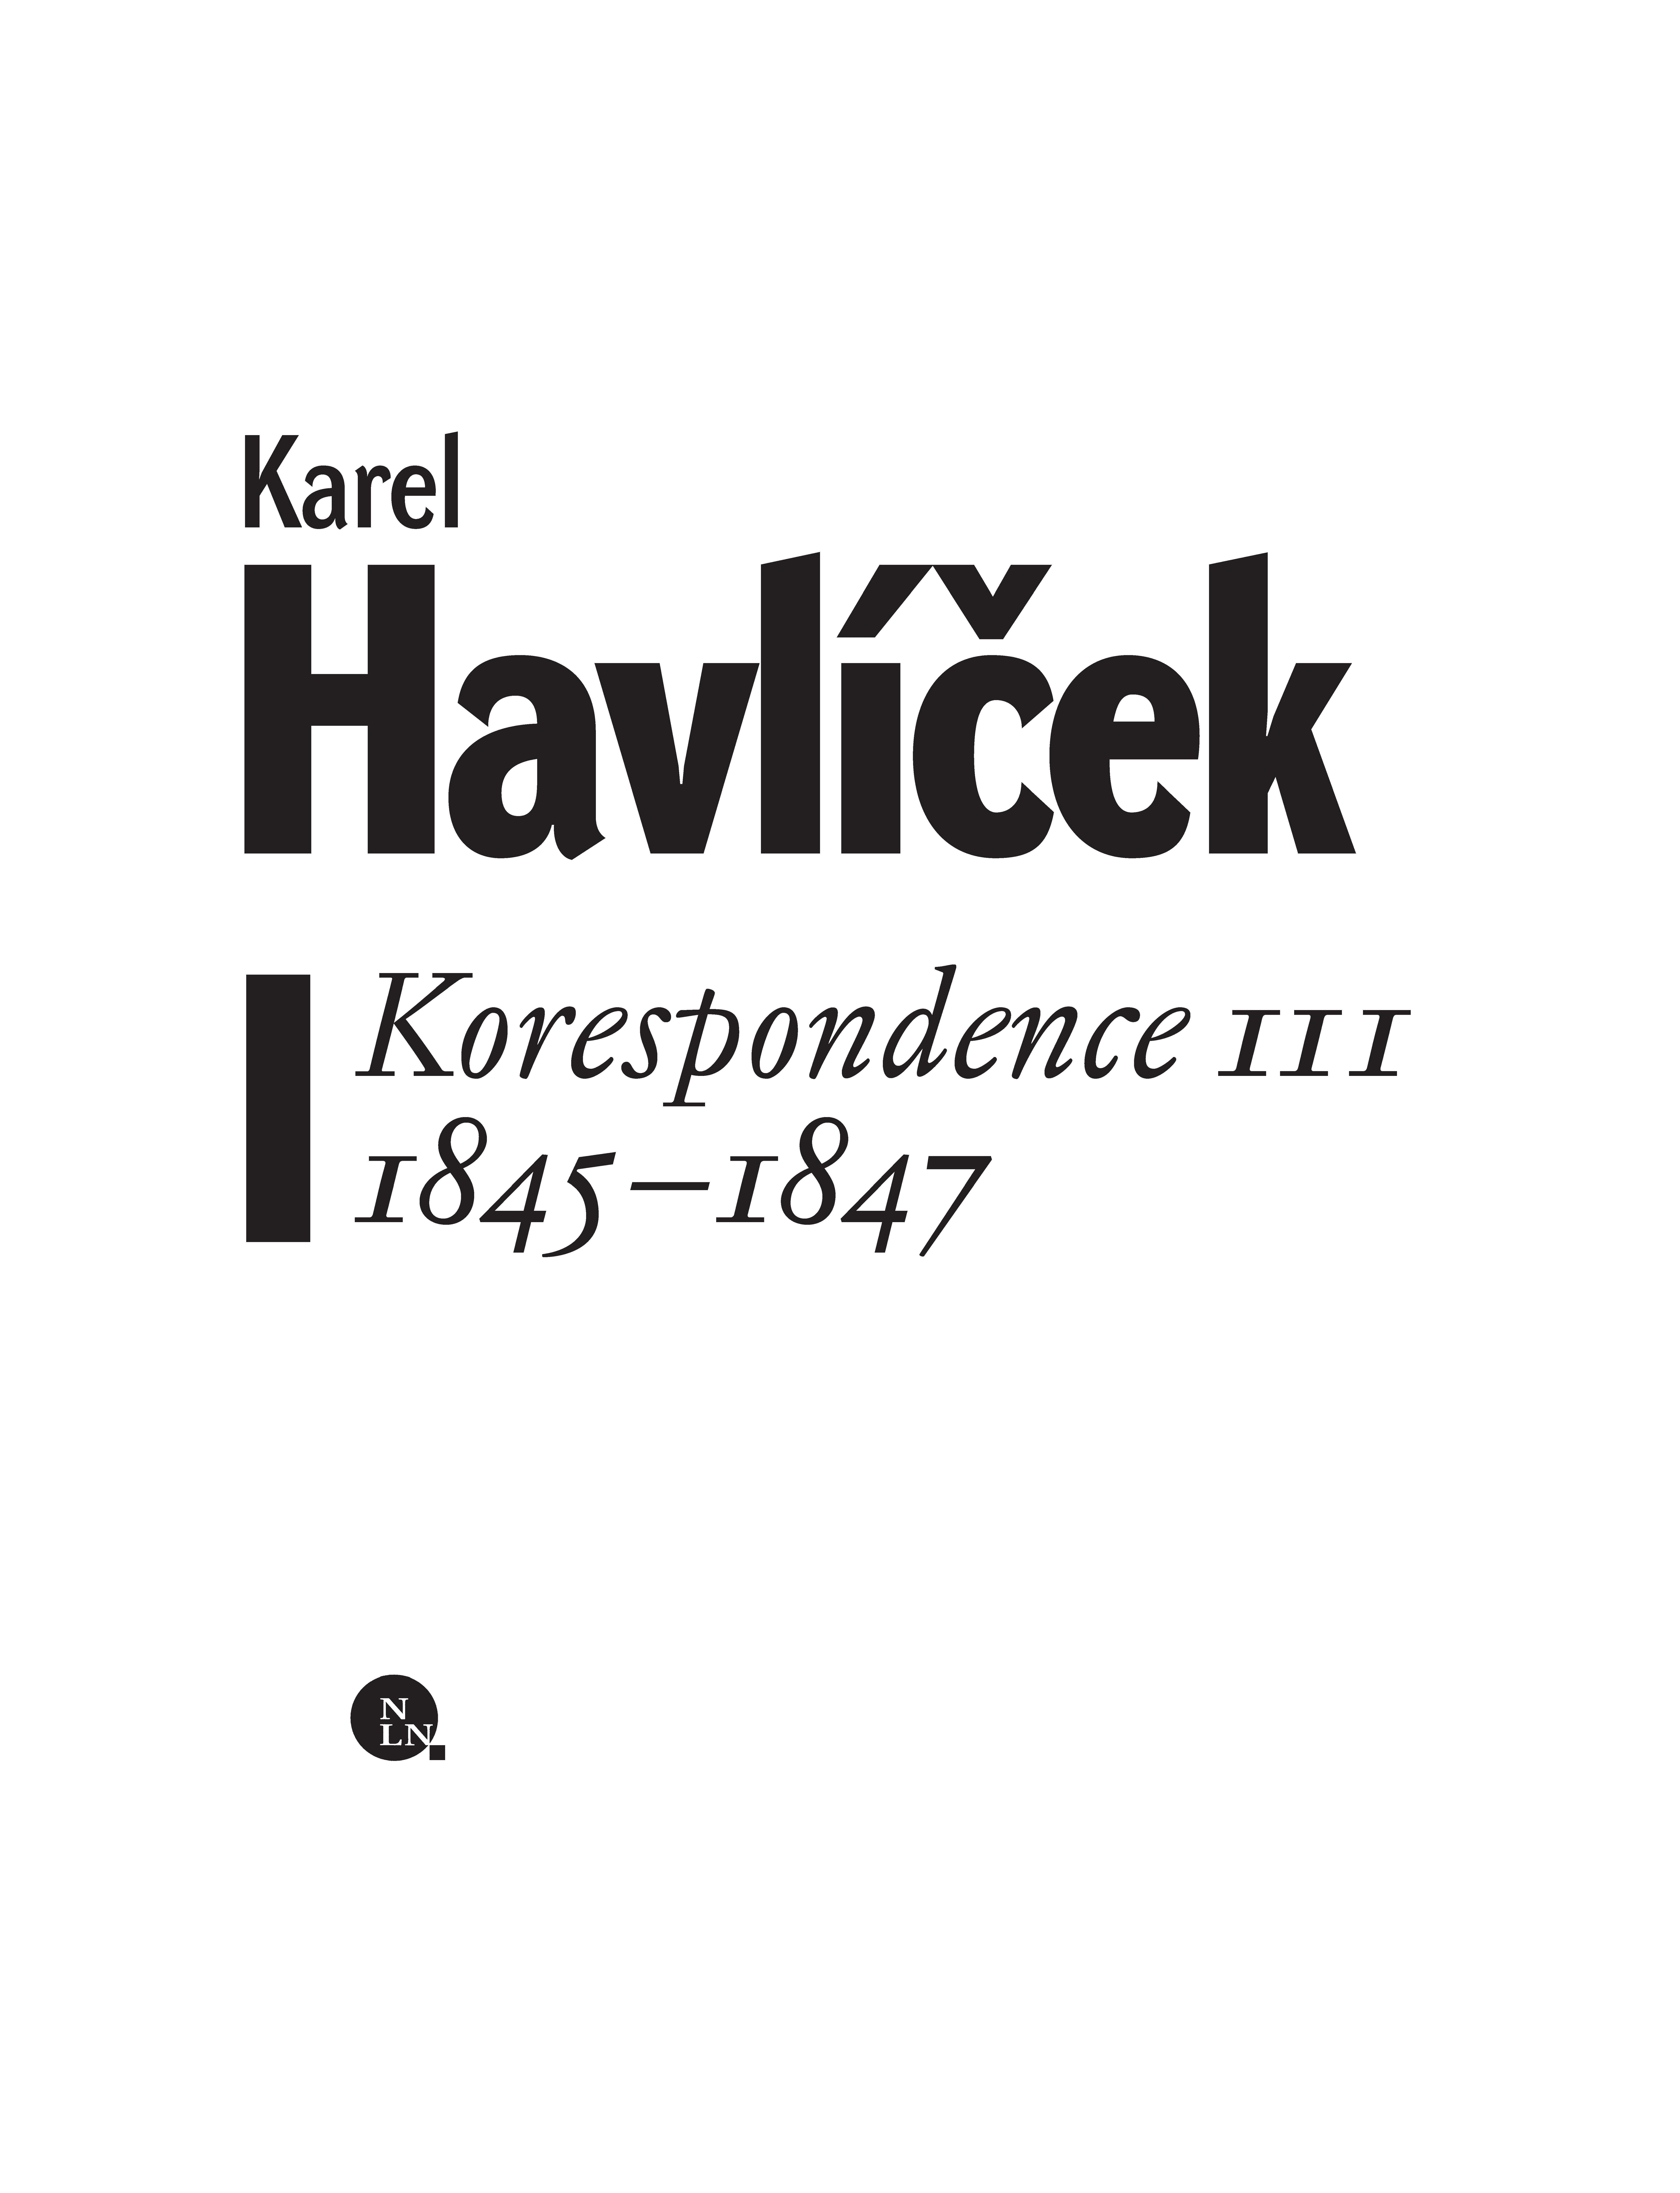 Karel Havlíček. Korespondence III ukázka-1